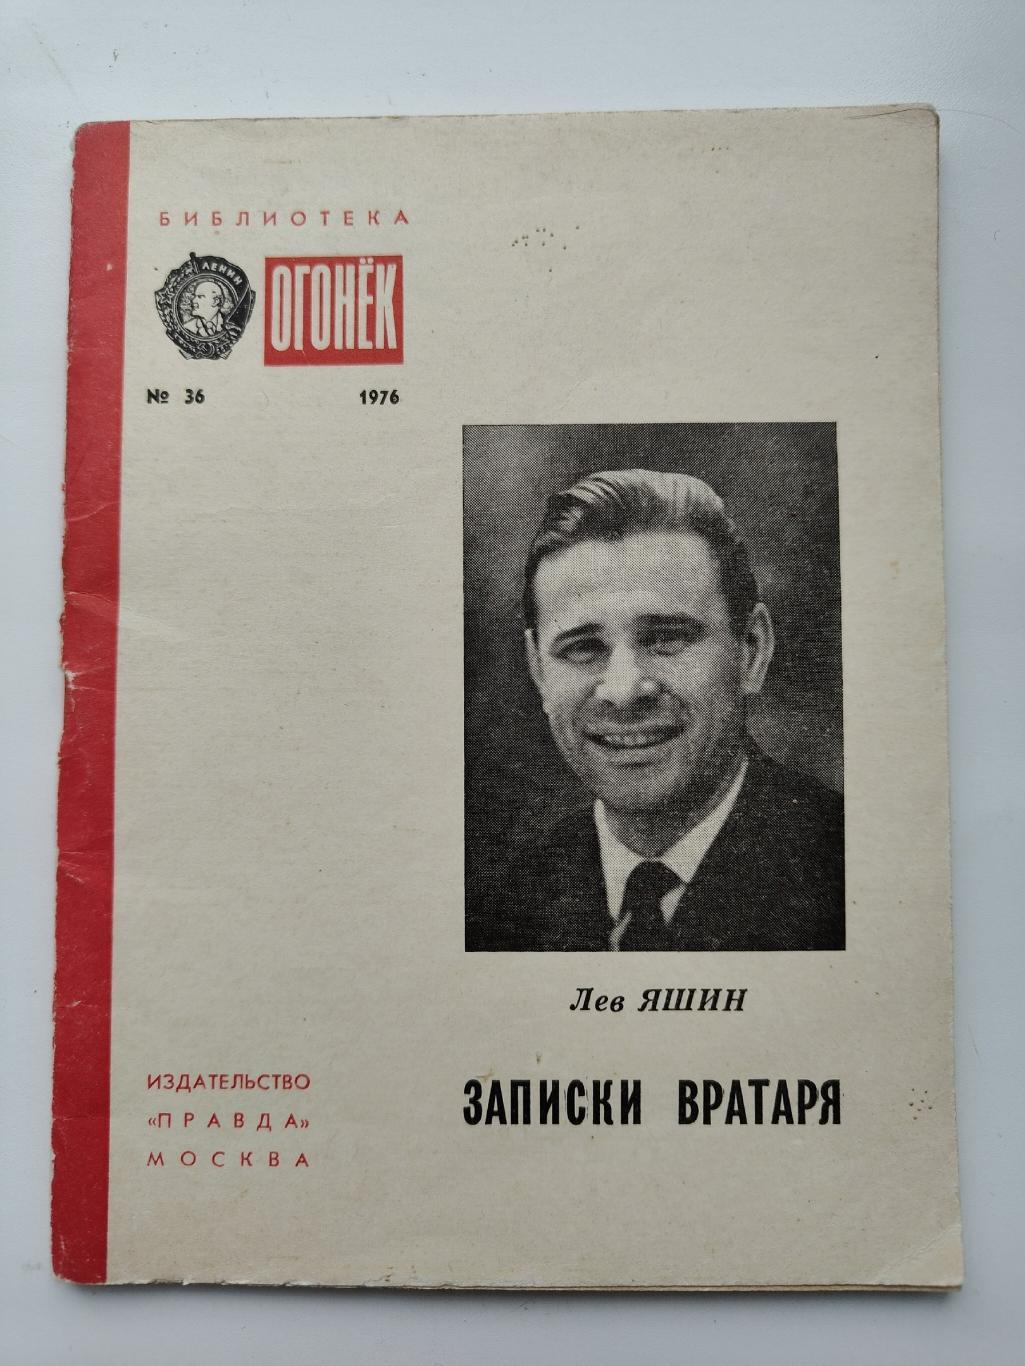 Библиотека Огонек. Лев Яшин Записки вратаря (изд. Правда Москва 1976)